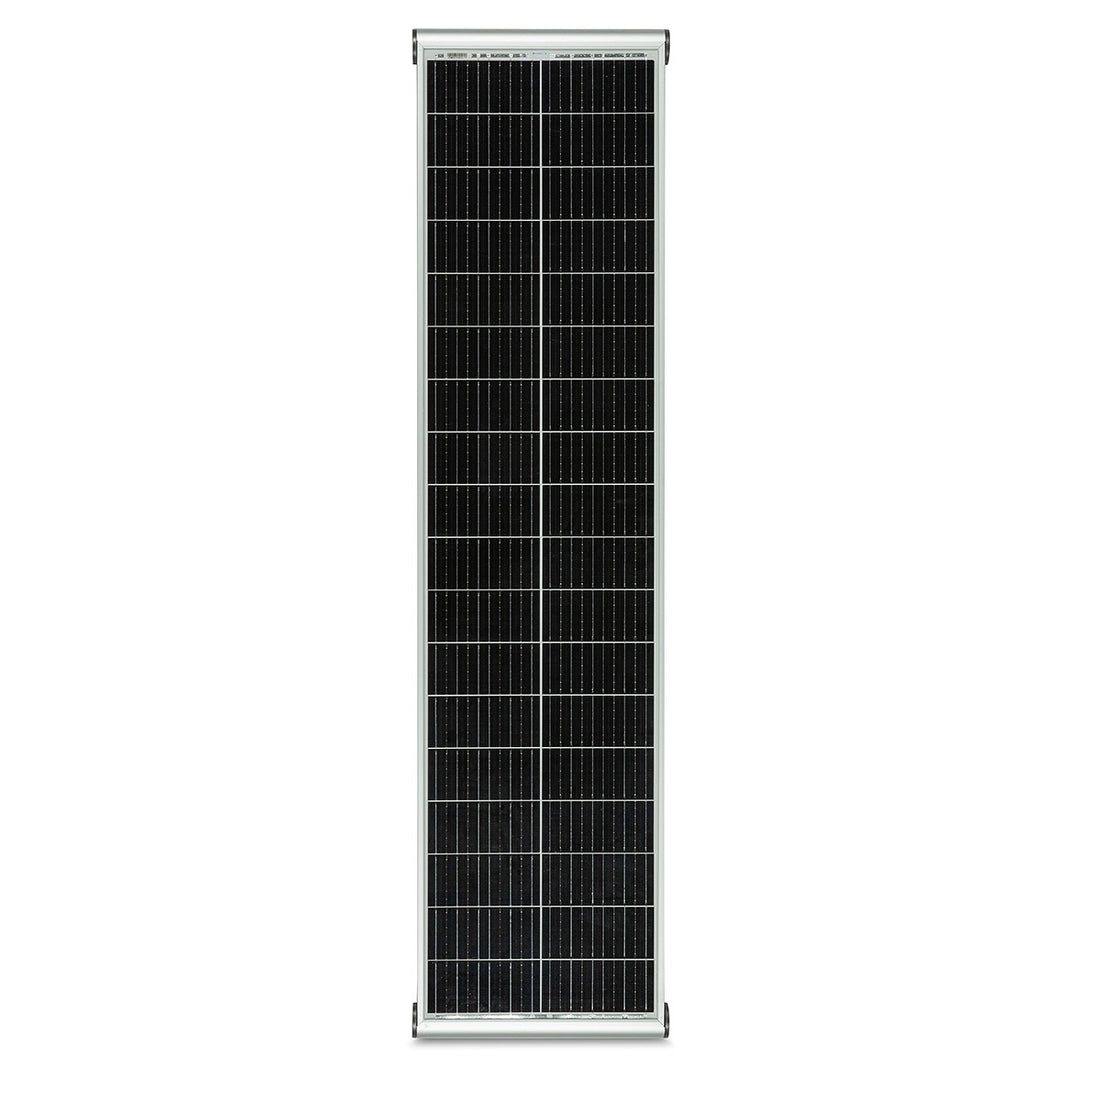 CAMPER SOLAR PANEL 120W NEW NARROW PROFILE - SPG120S